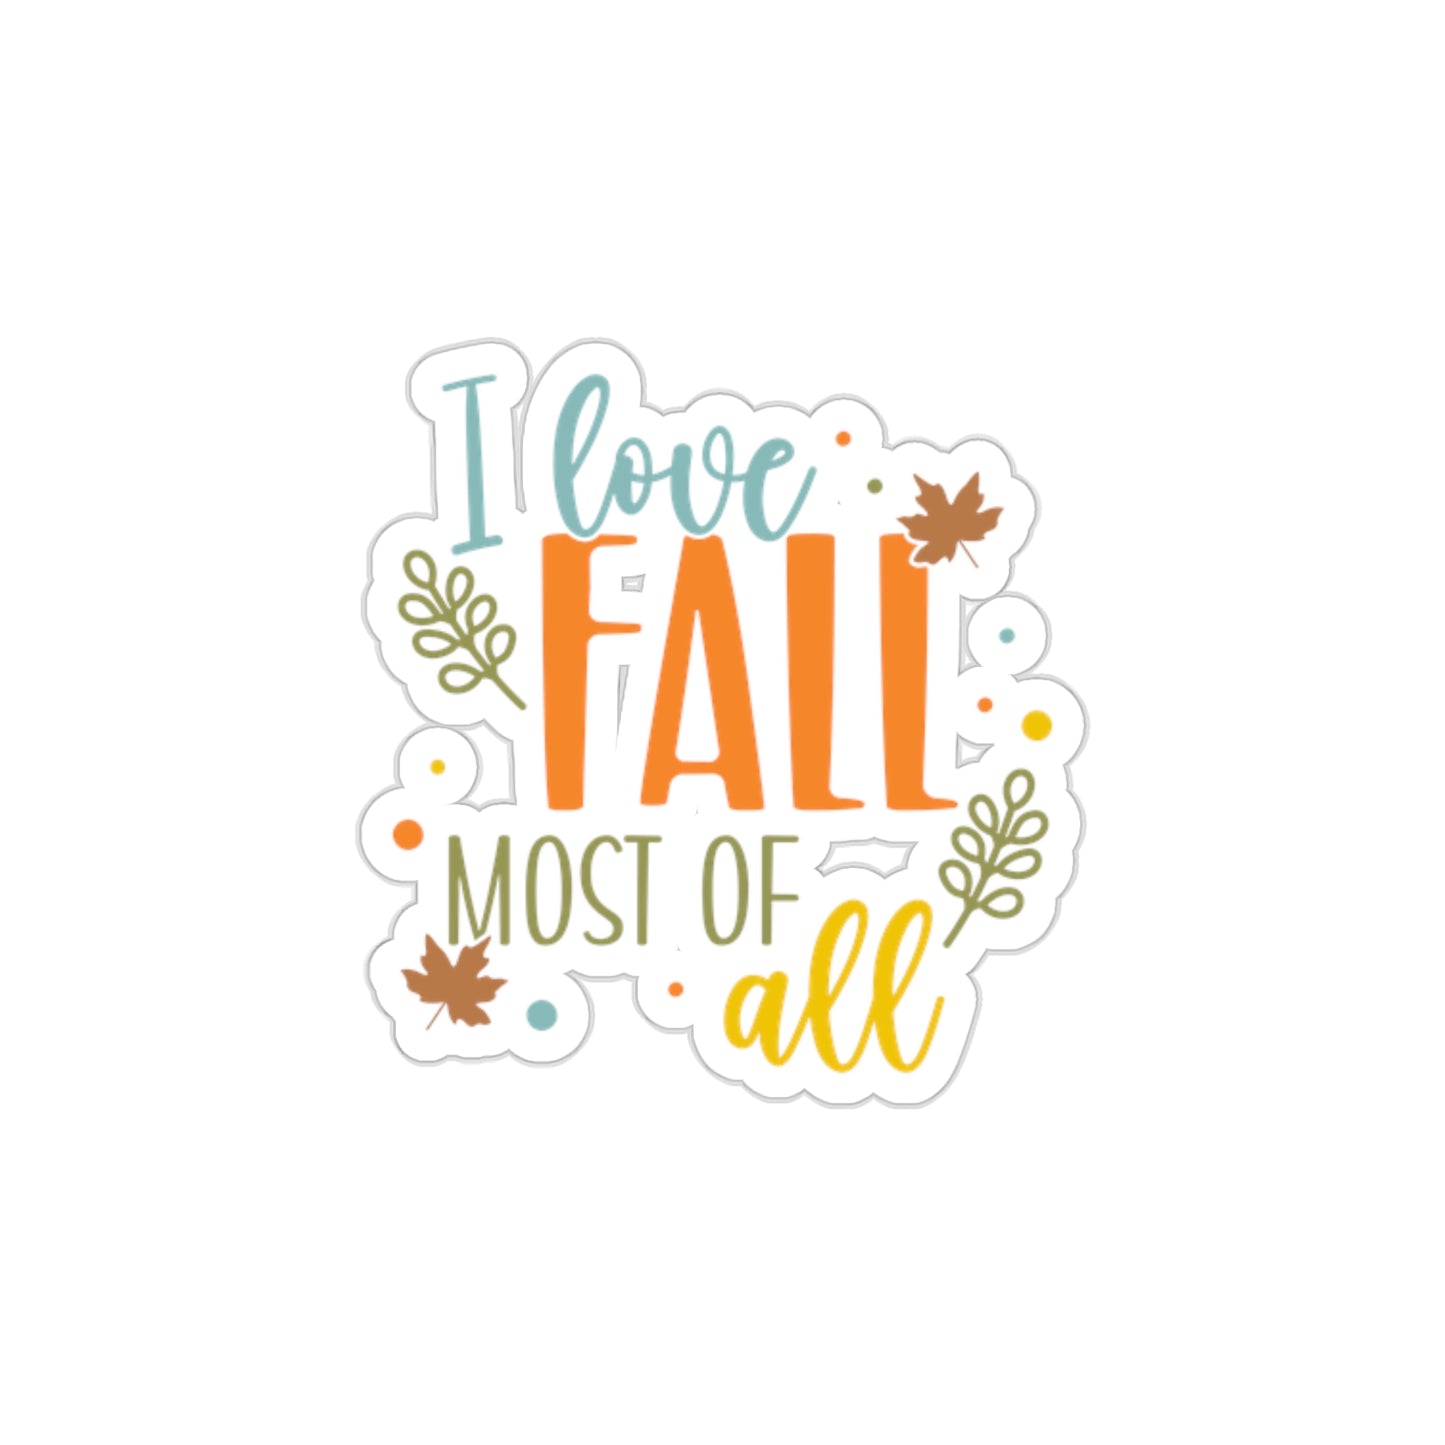 I Love Fall Most of All Sticker - Fall Theme Sticker